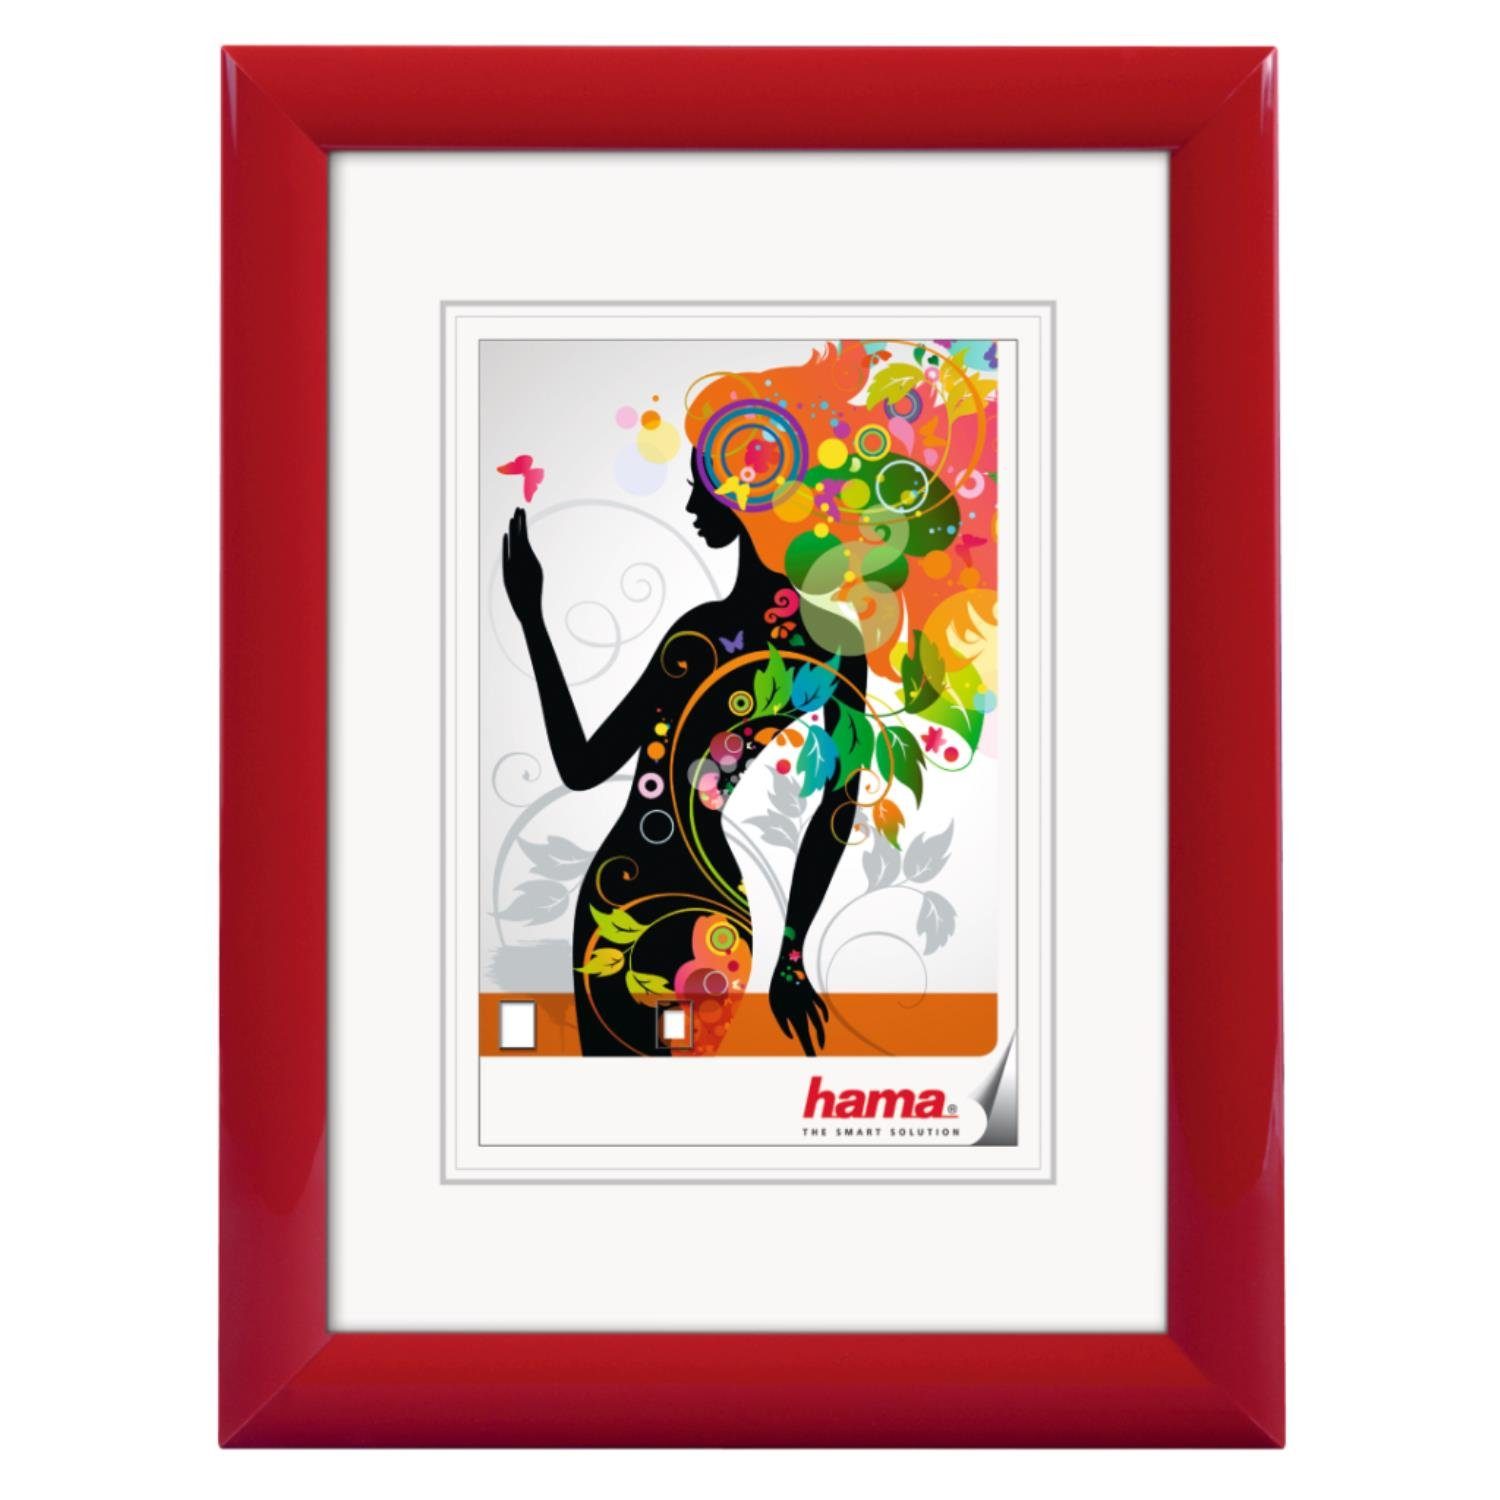 Bilderrahmen Hama mit Aufhängevorrichtung Malaga (einzeln), rot Portrait Deko Foto Poster Wand, mit Passepartouteinleger, Bilderrahmen